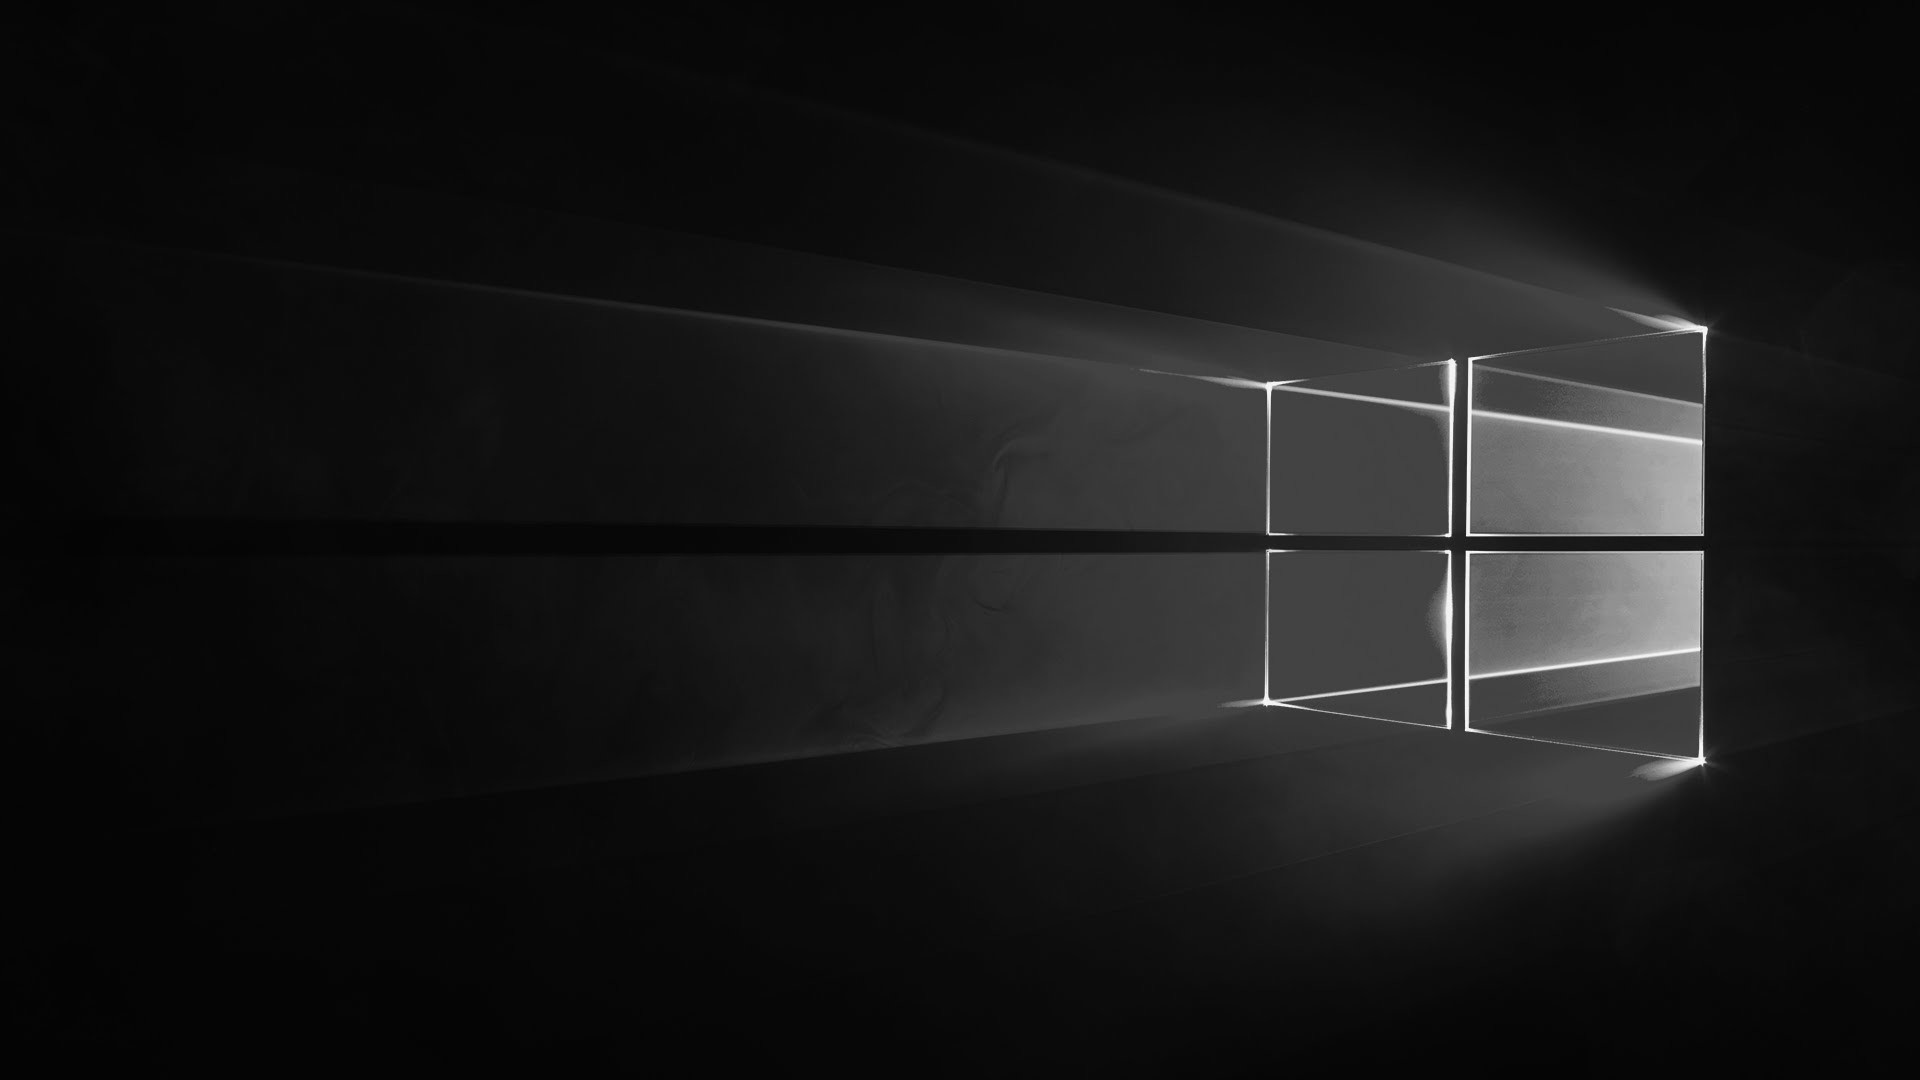 Windows 10 Dark Wallpaper (70+ images)